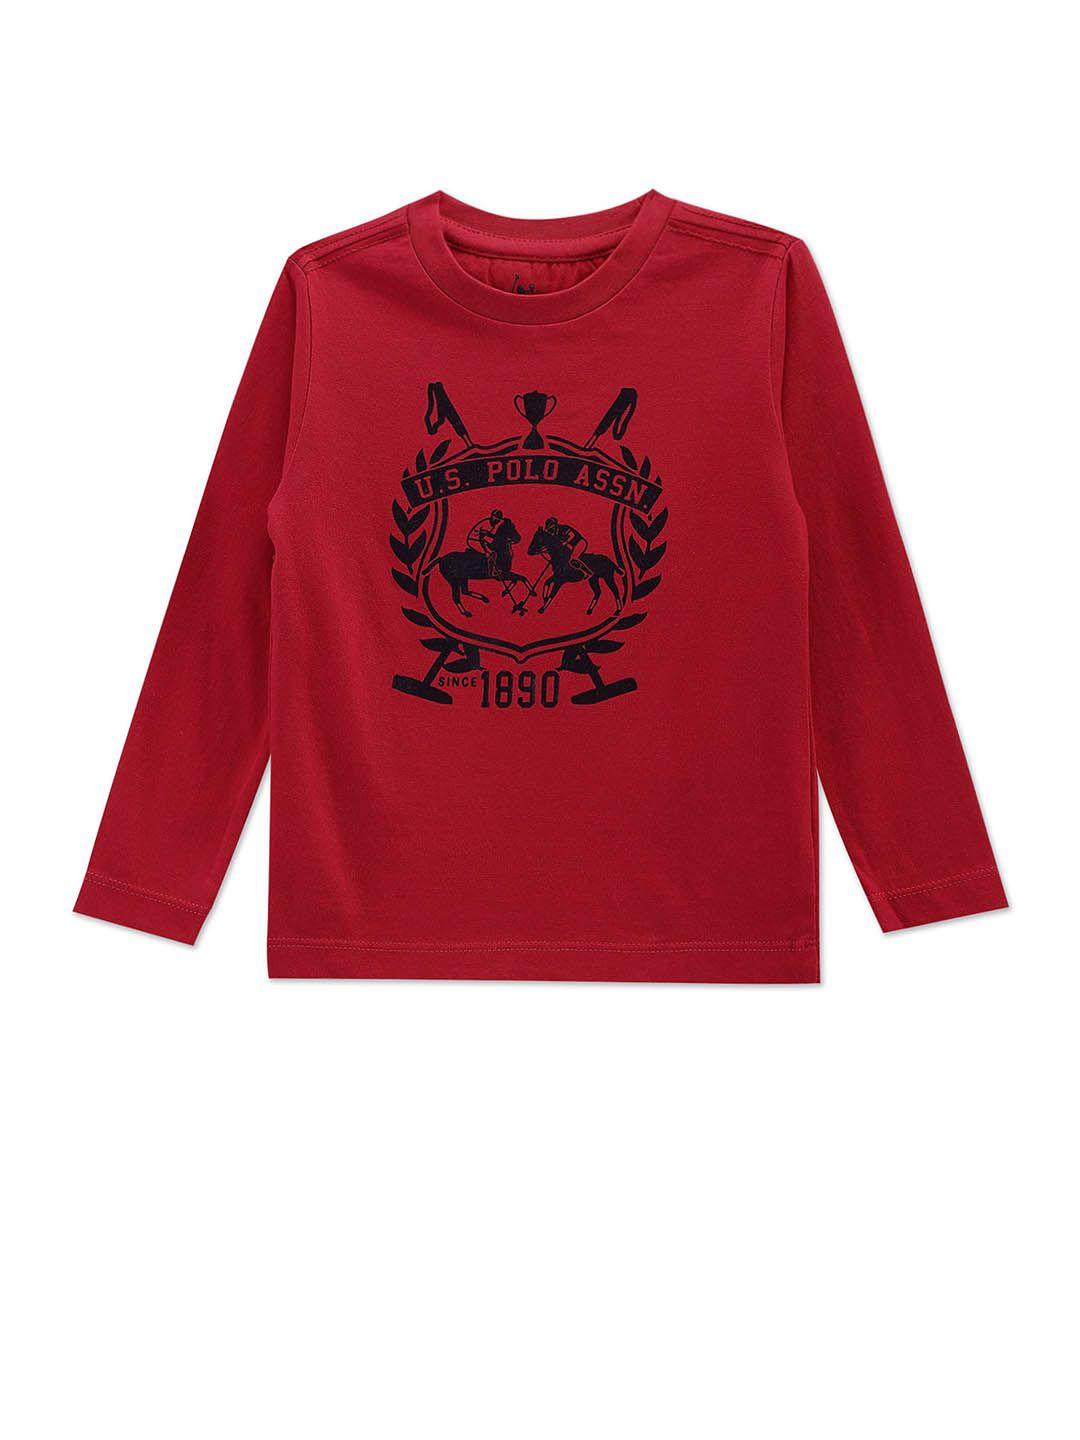 u.s. polo assn. kids boys brand logo printed pure cotton t-shirt